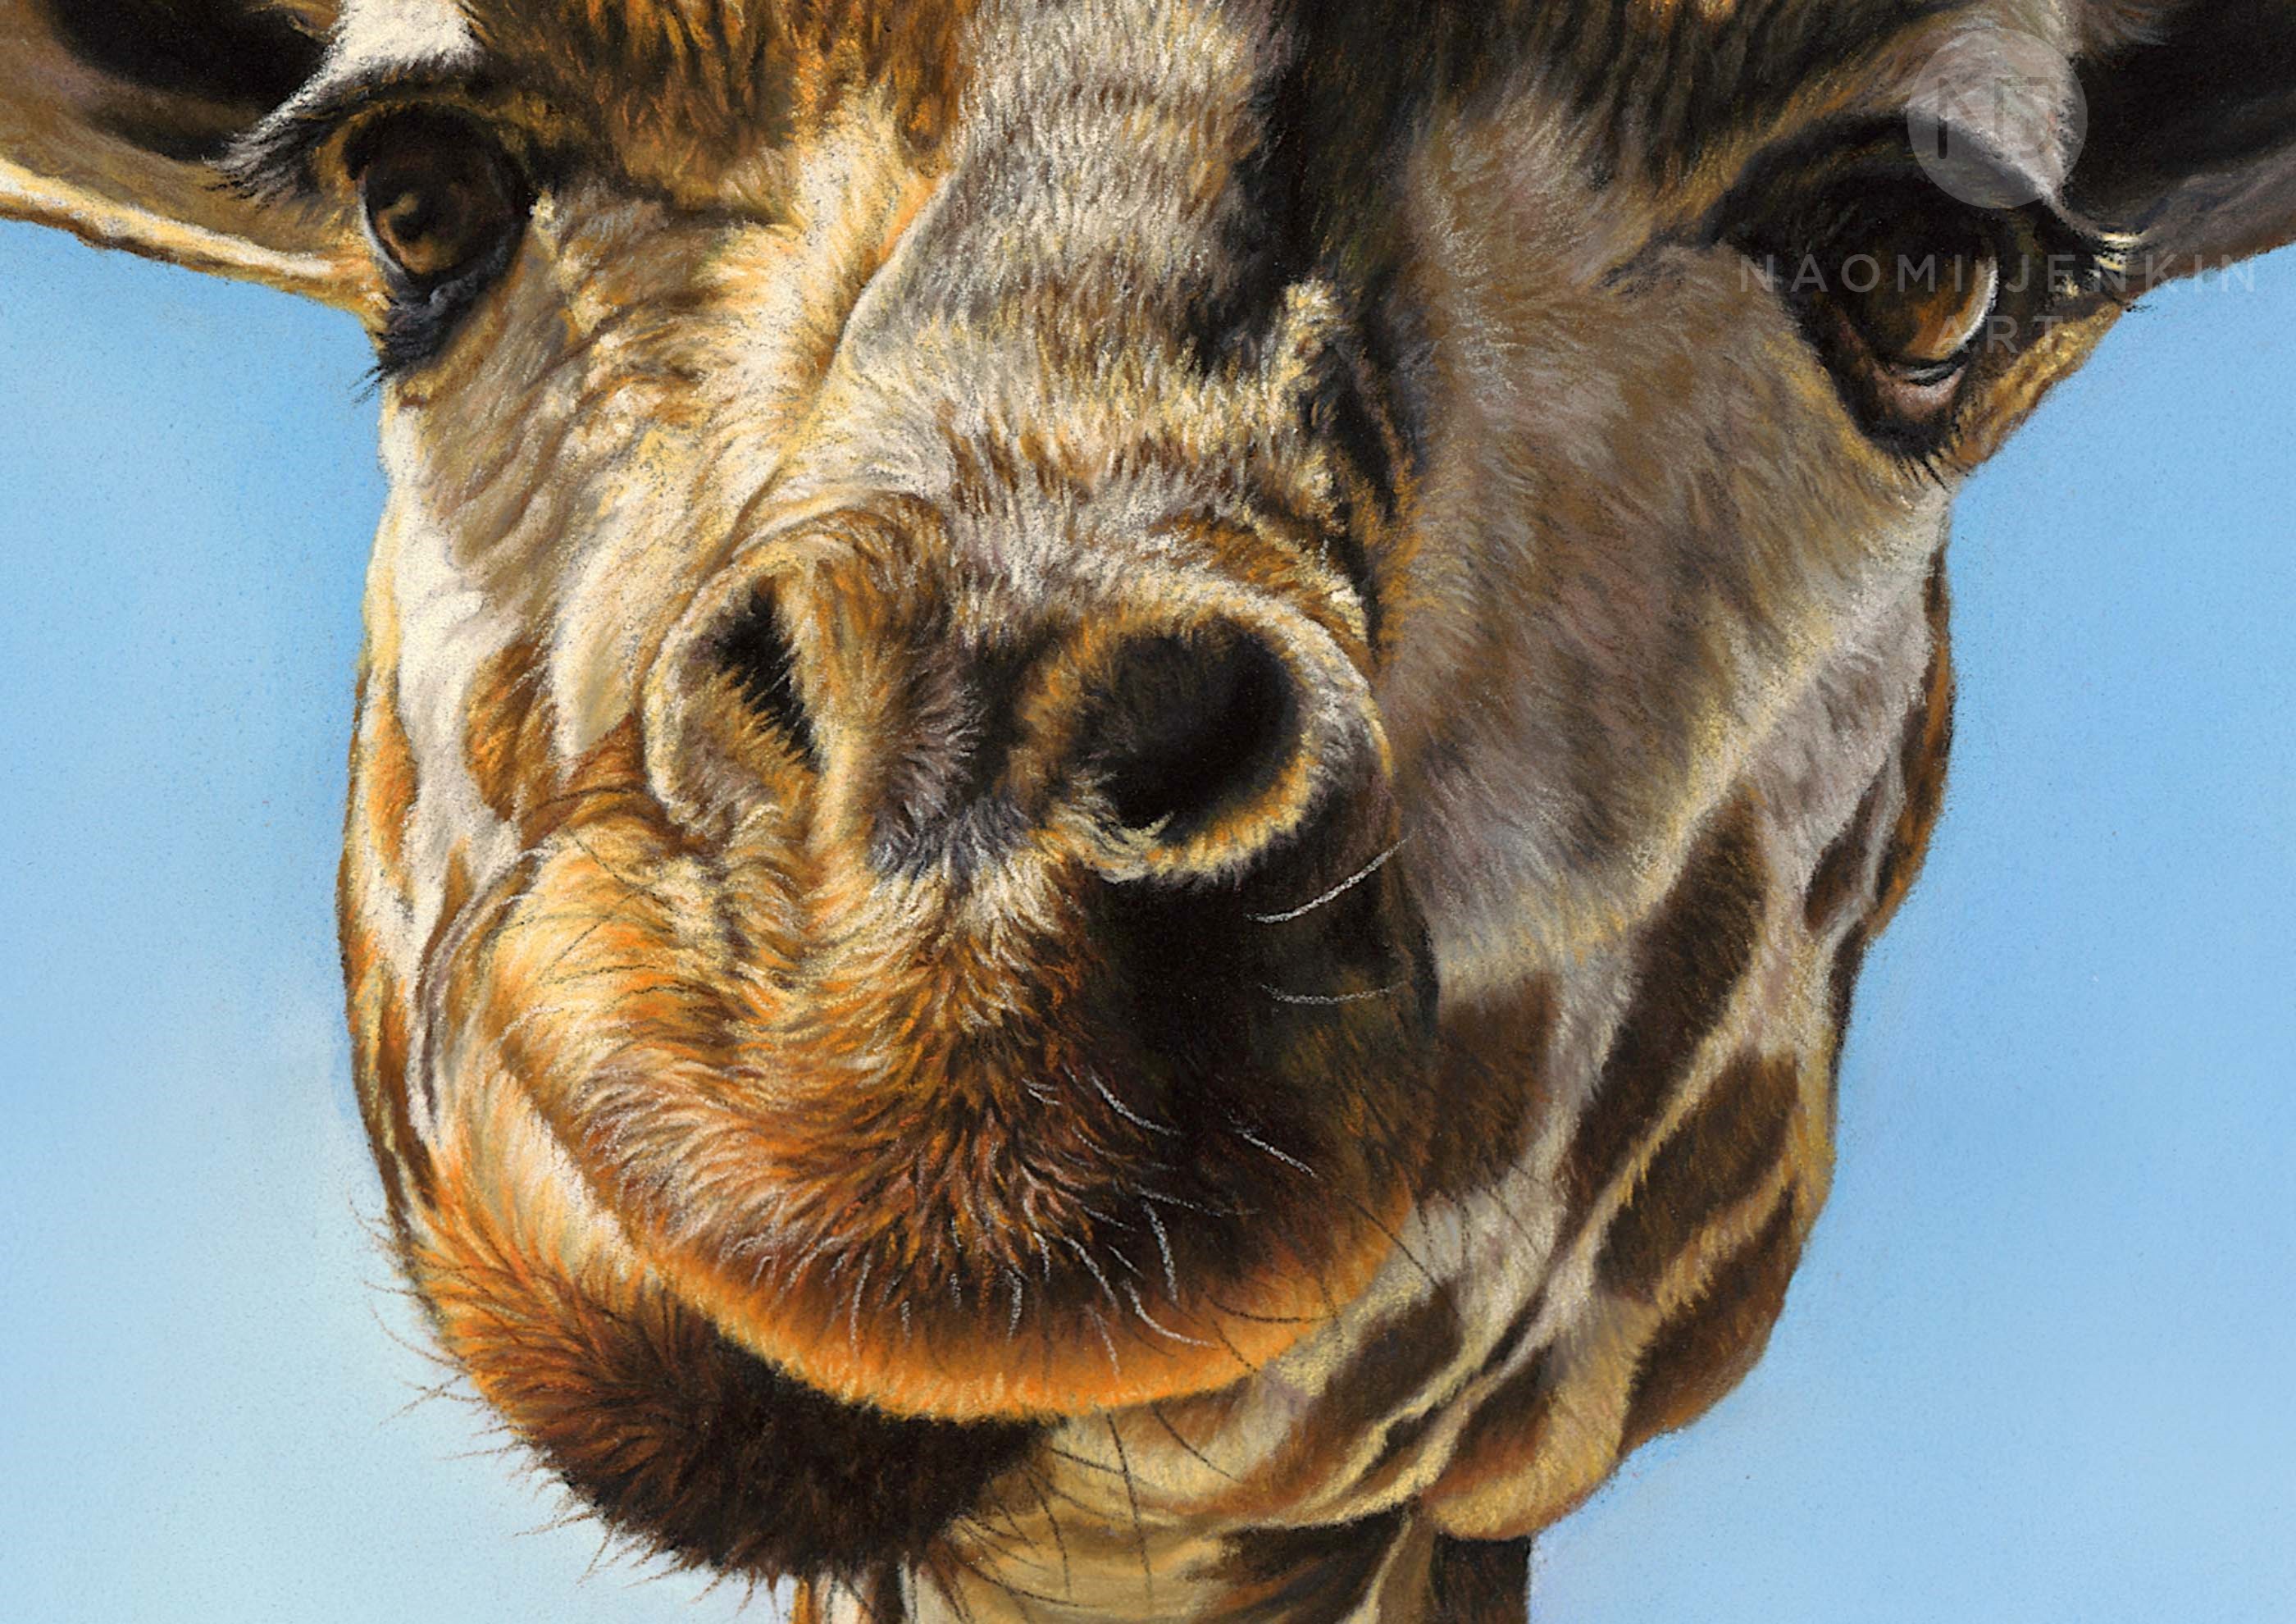 Close up of giraffe painting by wildlife artist Naomi Jenkin.